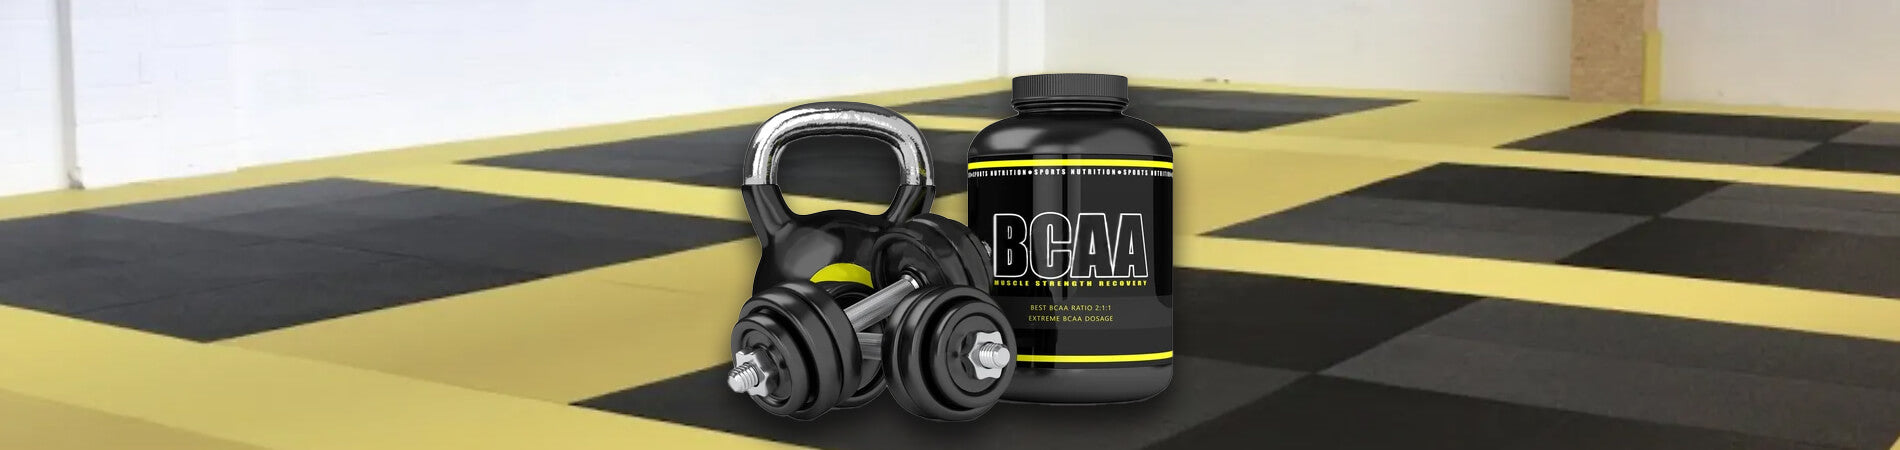 BCAA: An essential supplement for BJJ training